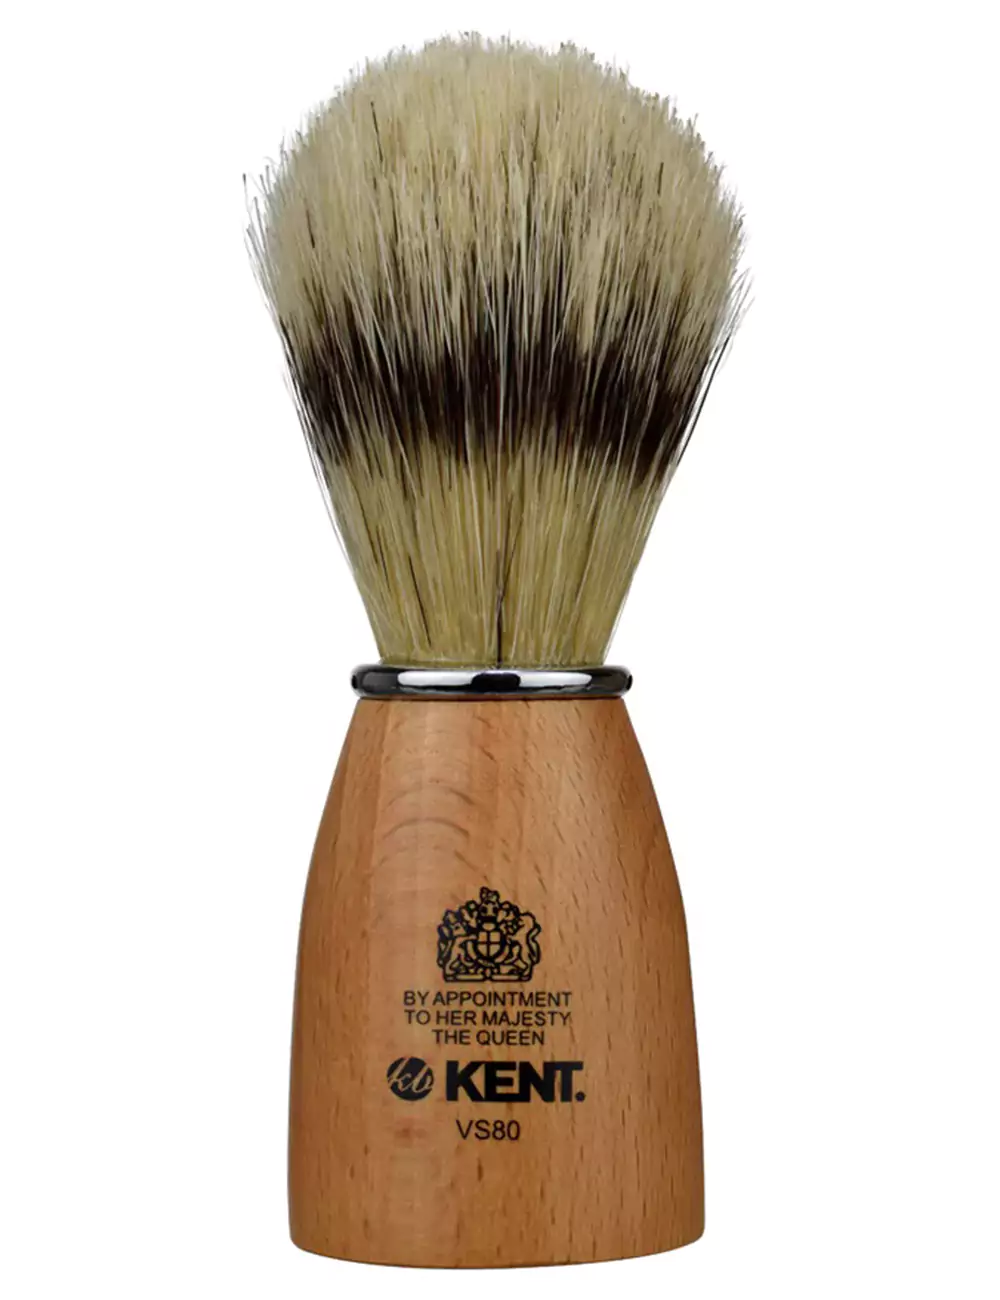 kent-vs80-small-shaving-brush-1